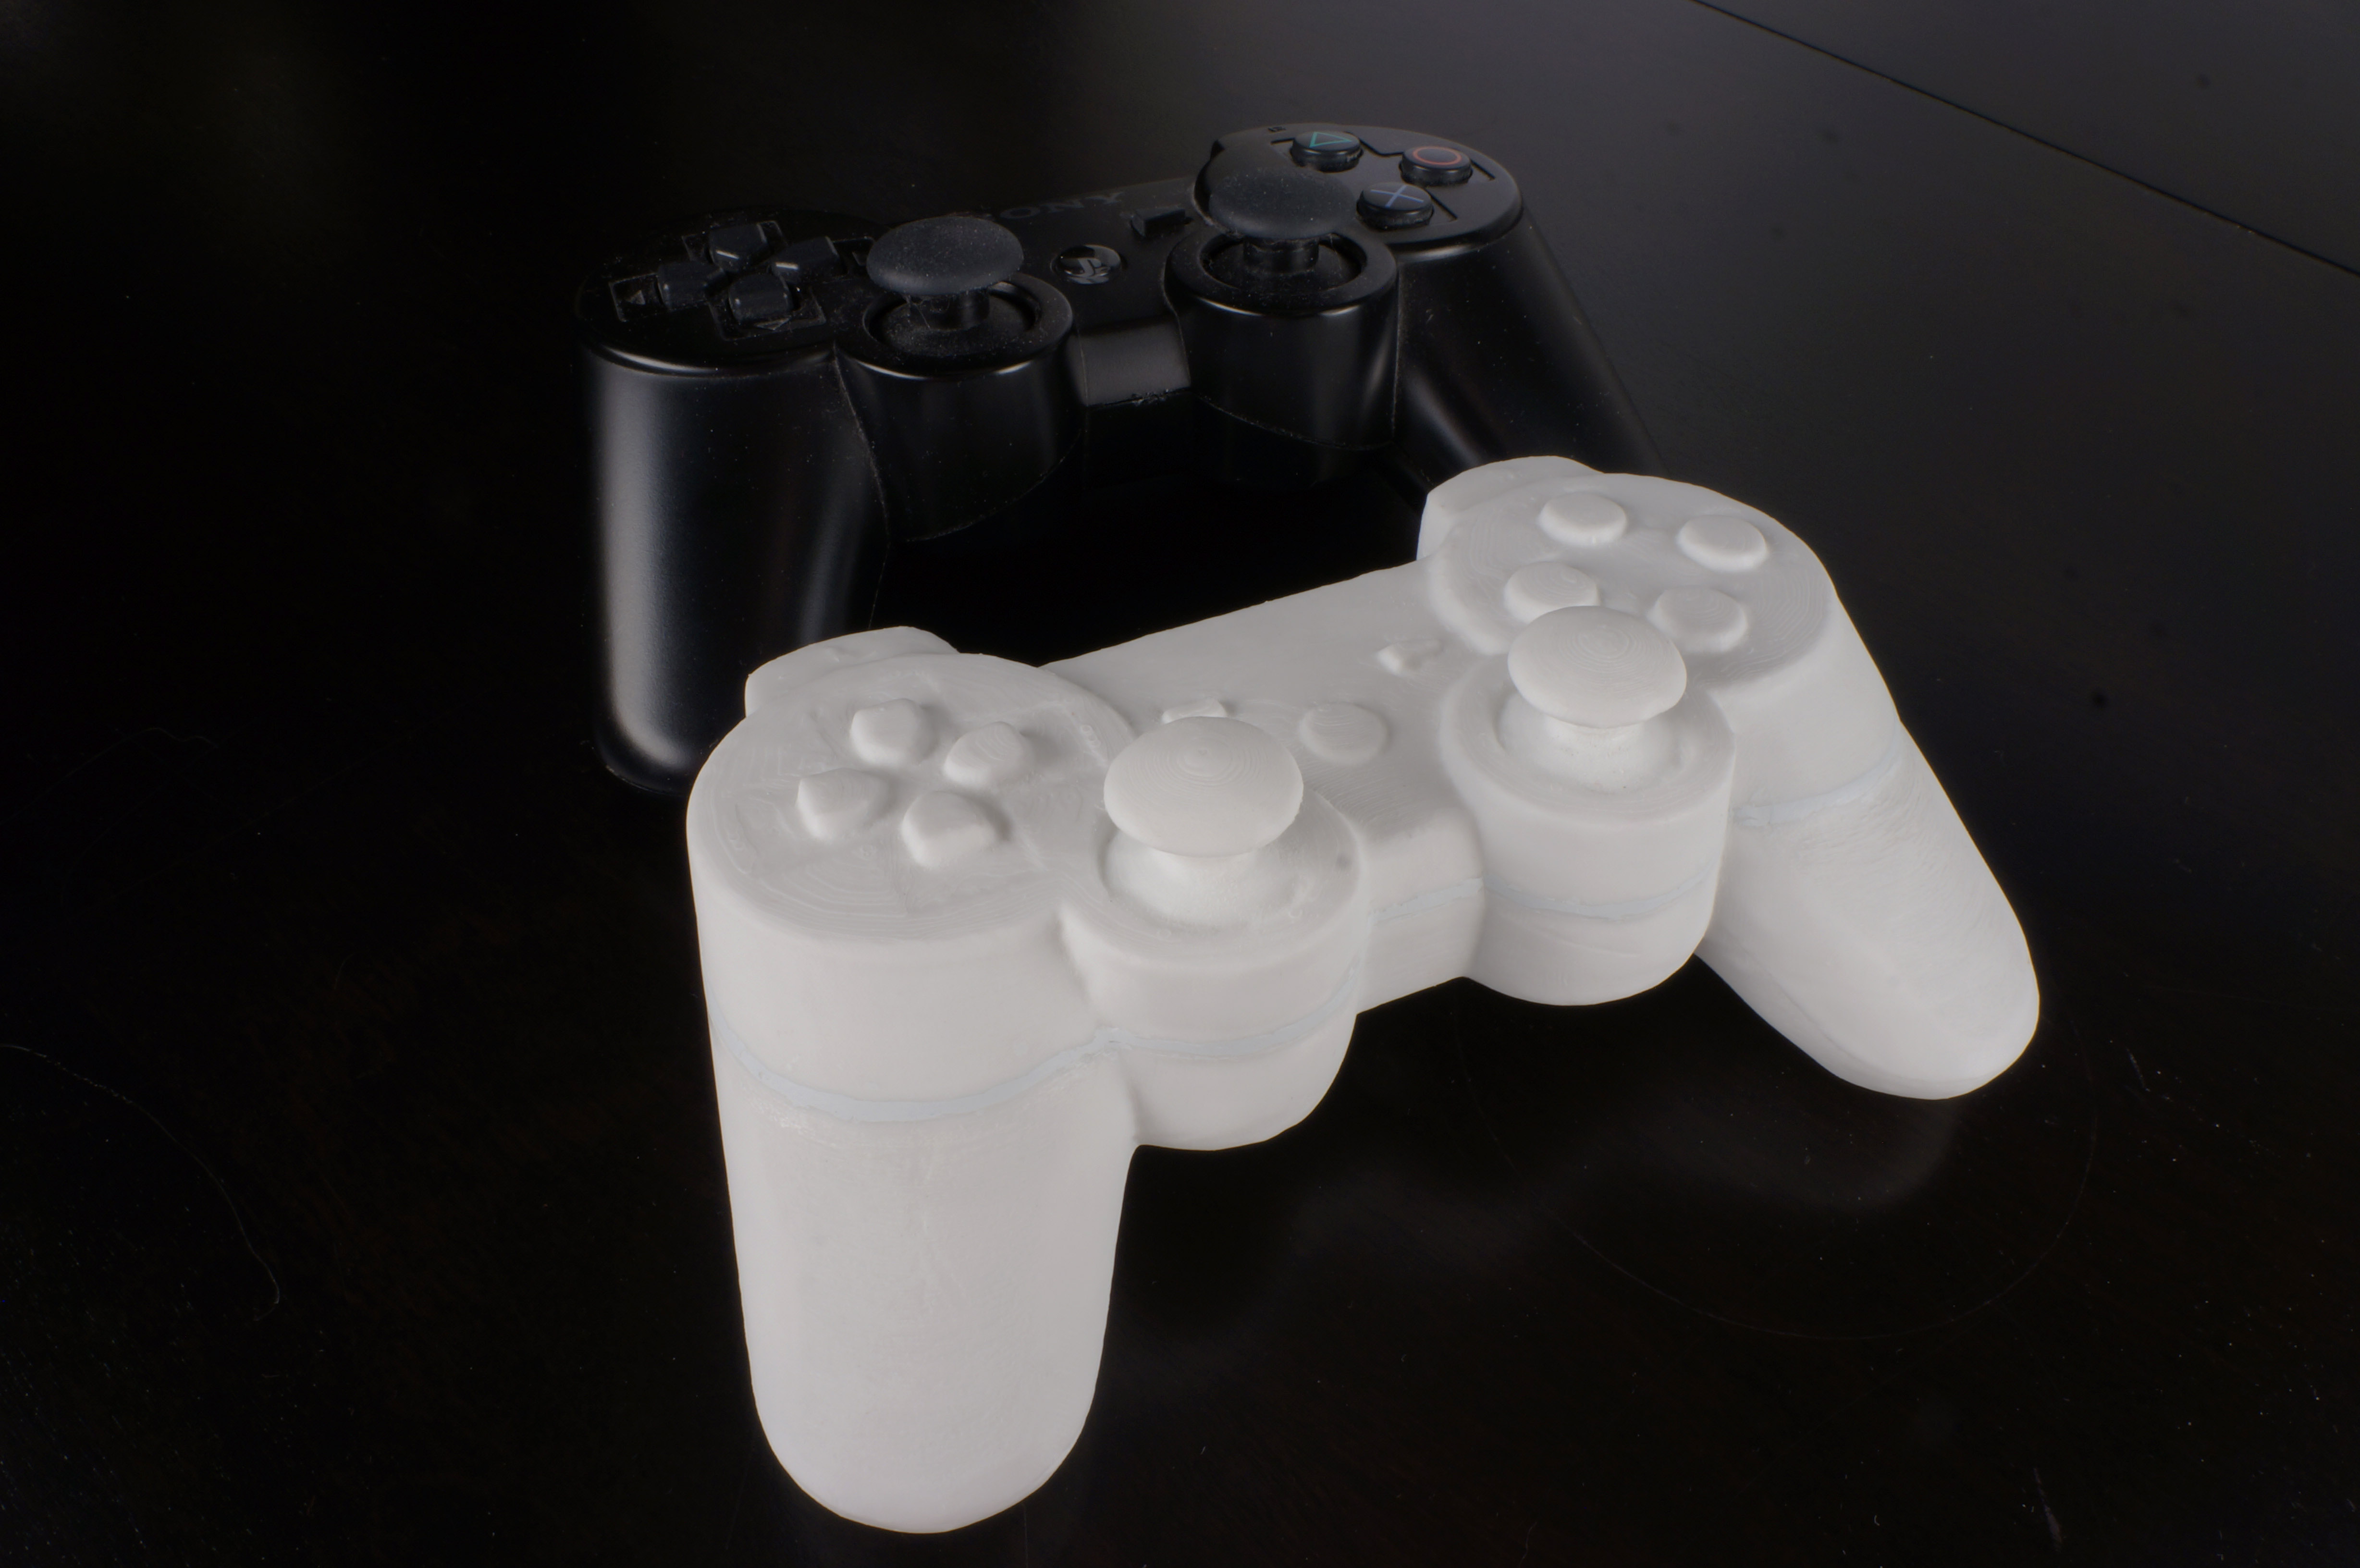 Playstation Controller Clone #designbycapture